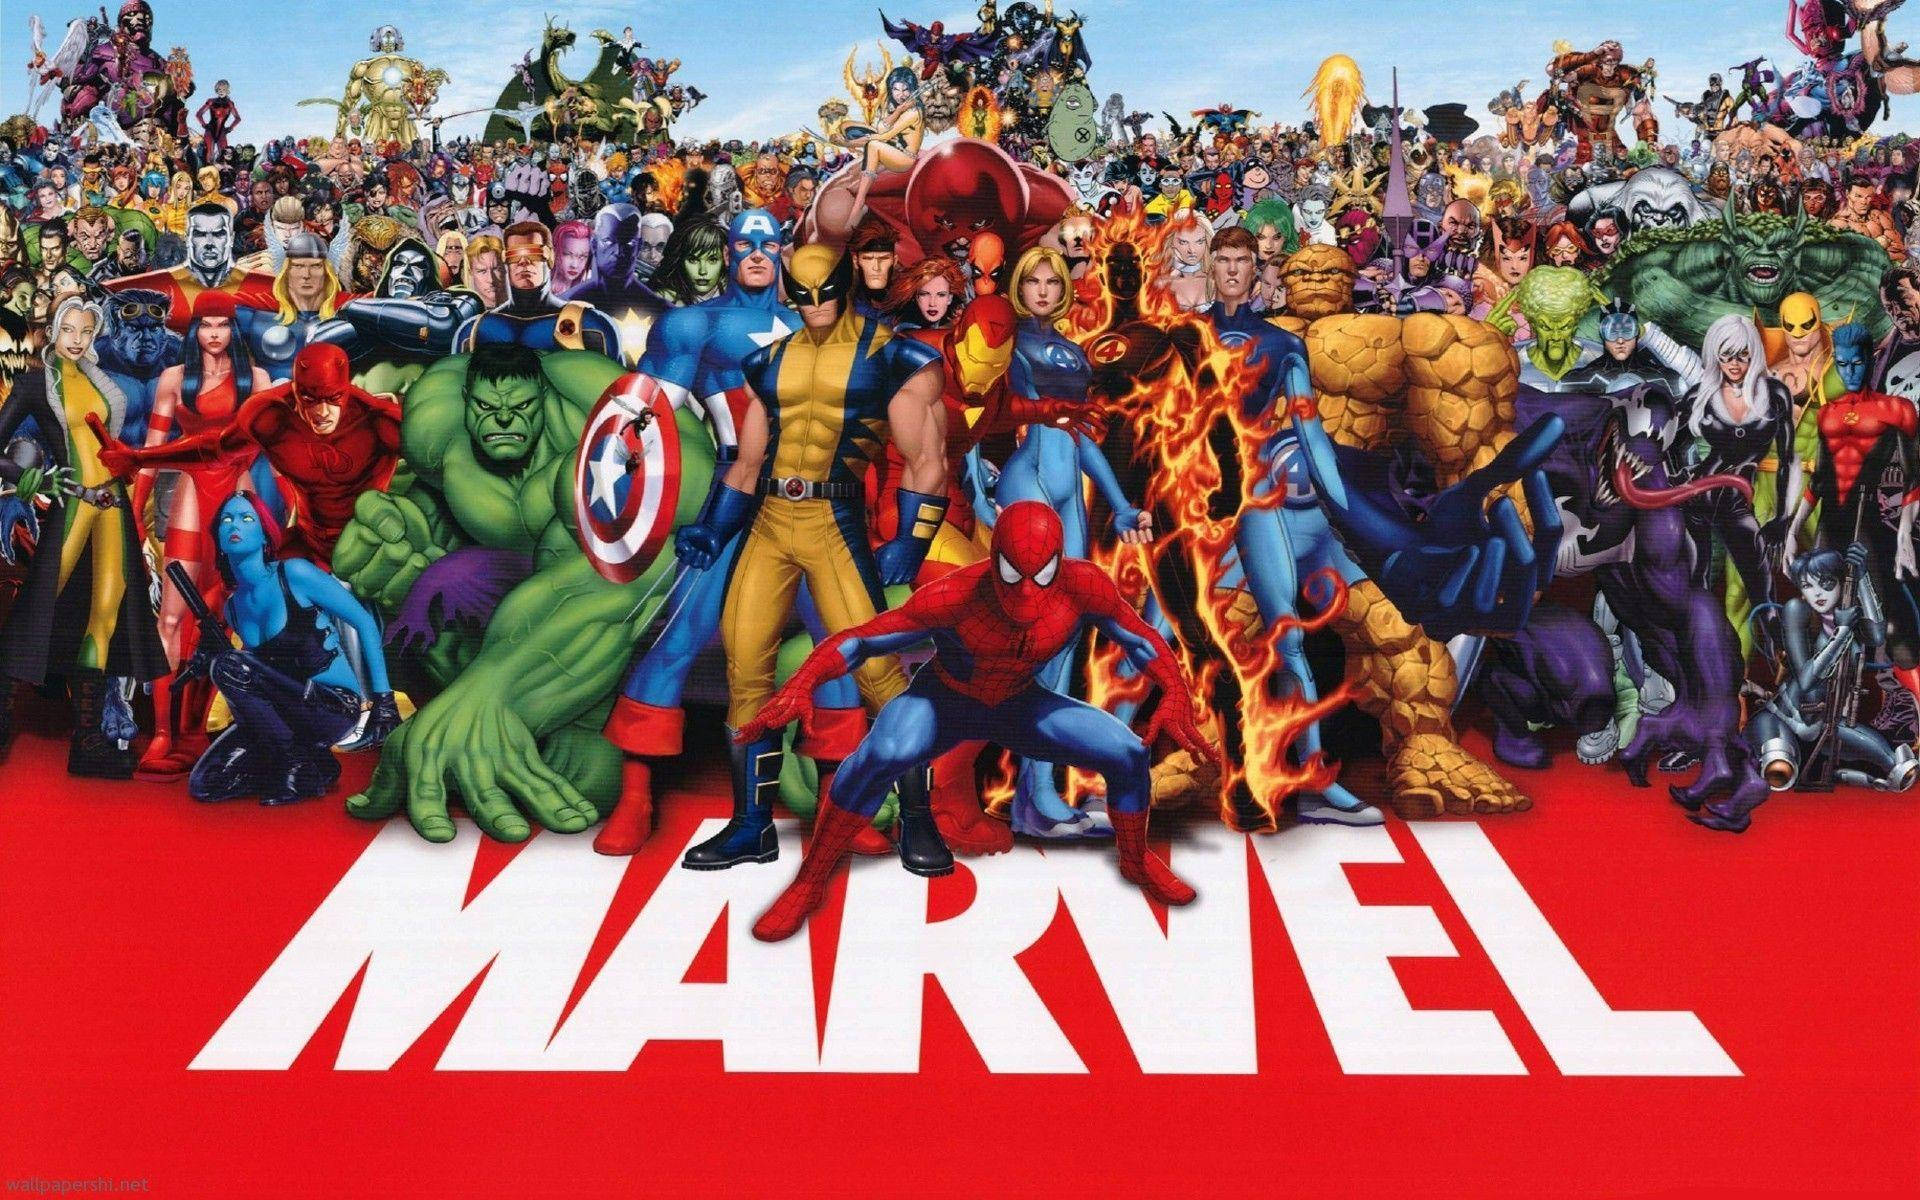 Top 999+ Marvel Superheroes Wallpaper Full HD, 4K Free to Use